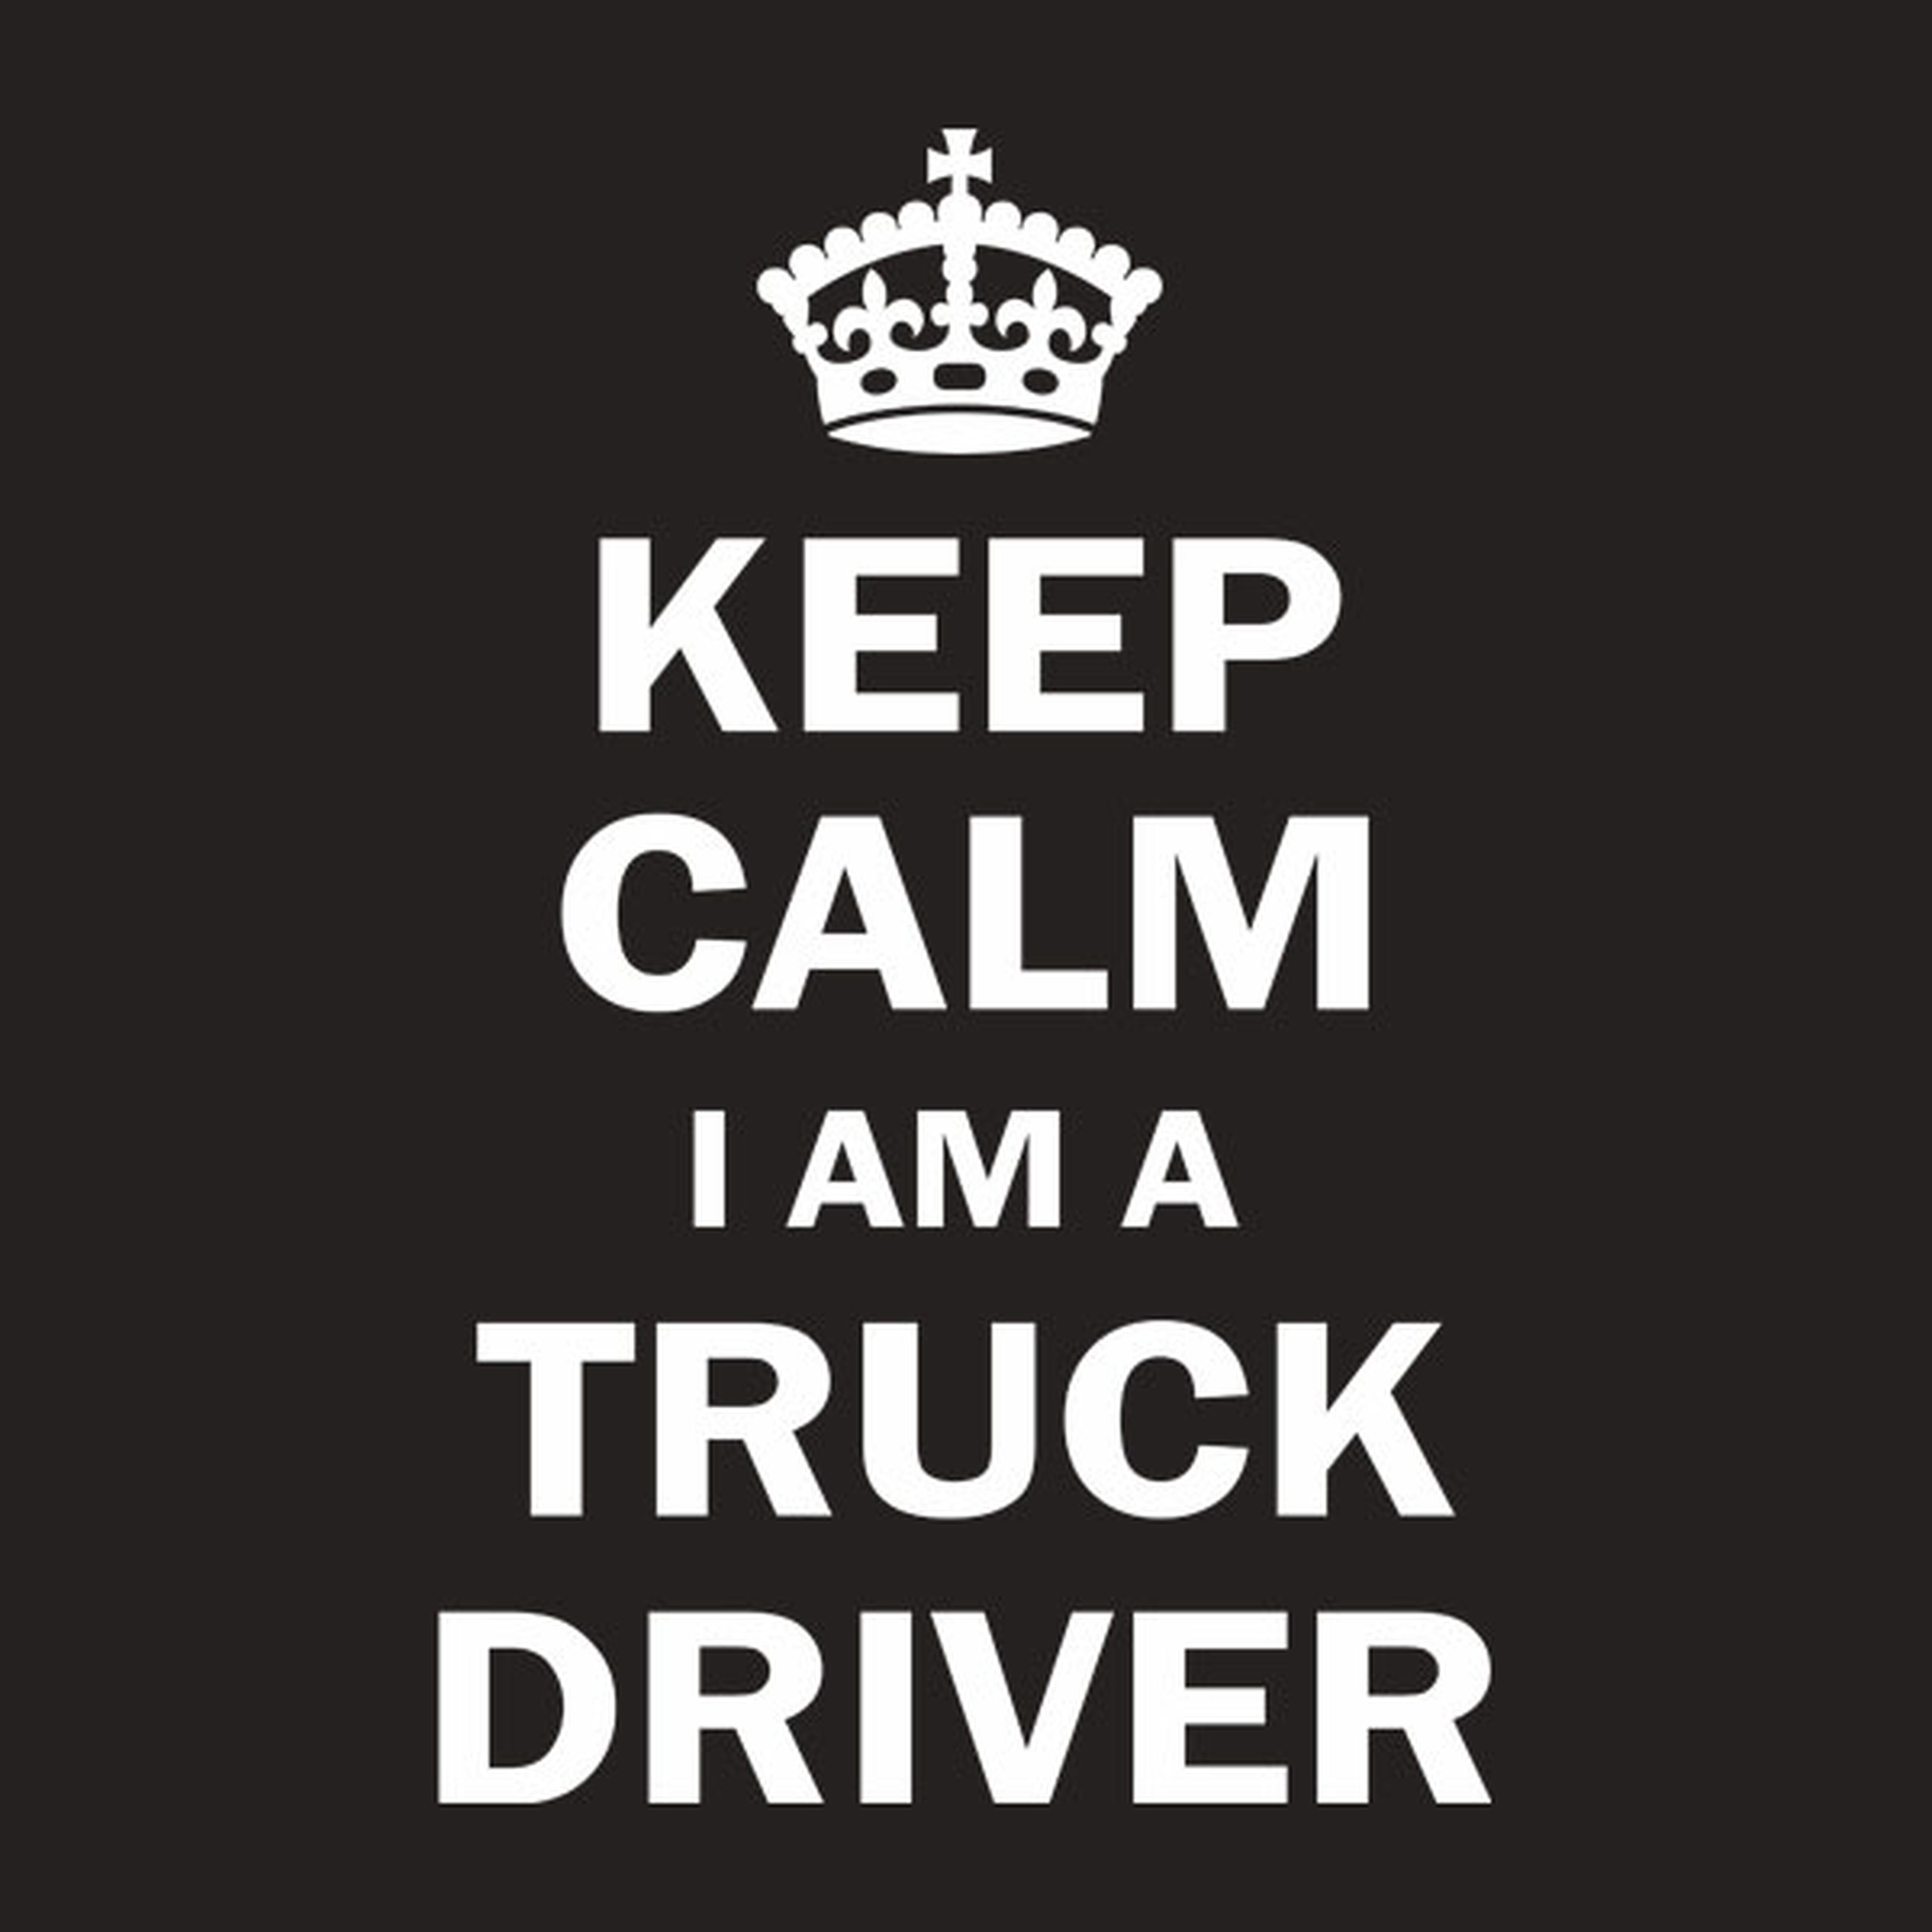 Keep calm I am a truck driver - T-shirt